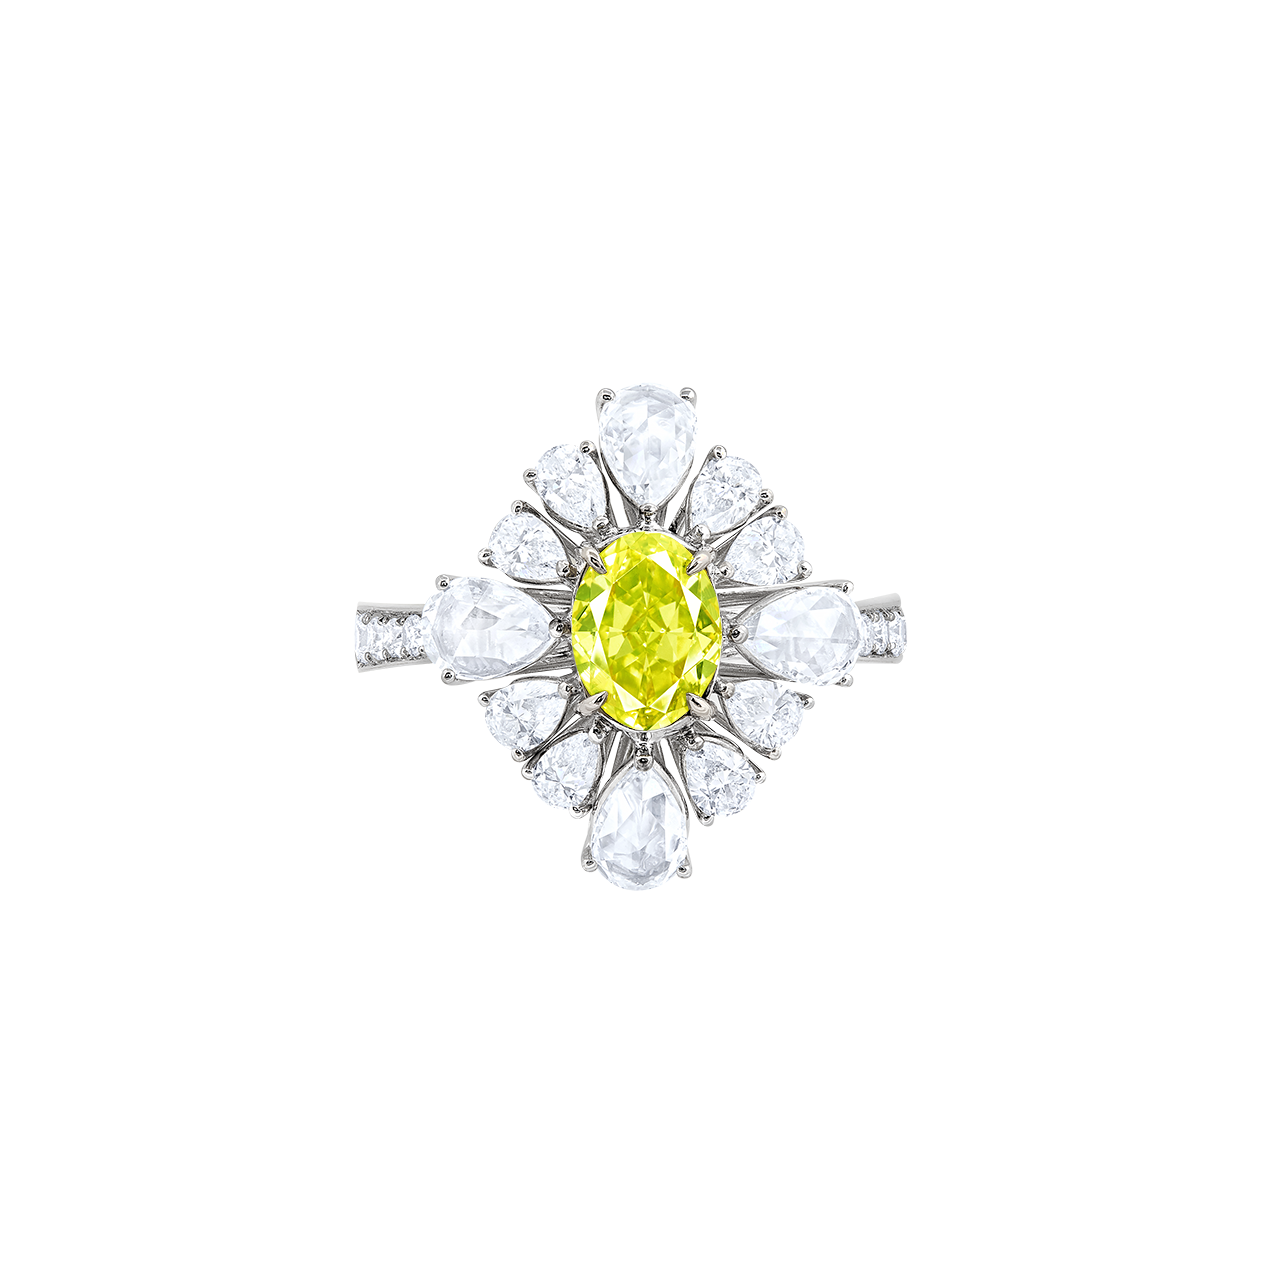 GIA 0.80克拉 濃彩綠黃鑽裸石戒
FANCY INTENSE GREENISH YELLOW
COLOURED DIAMOND AND DIAMOND RING